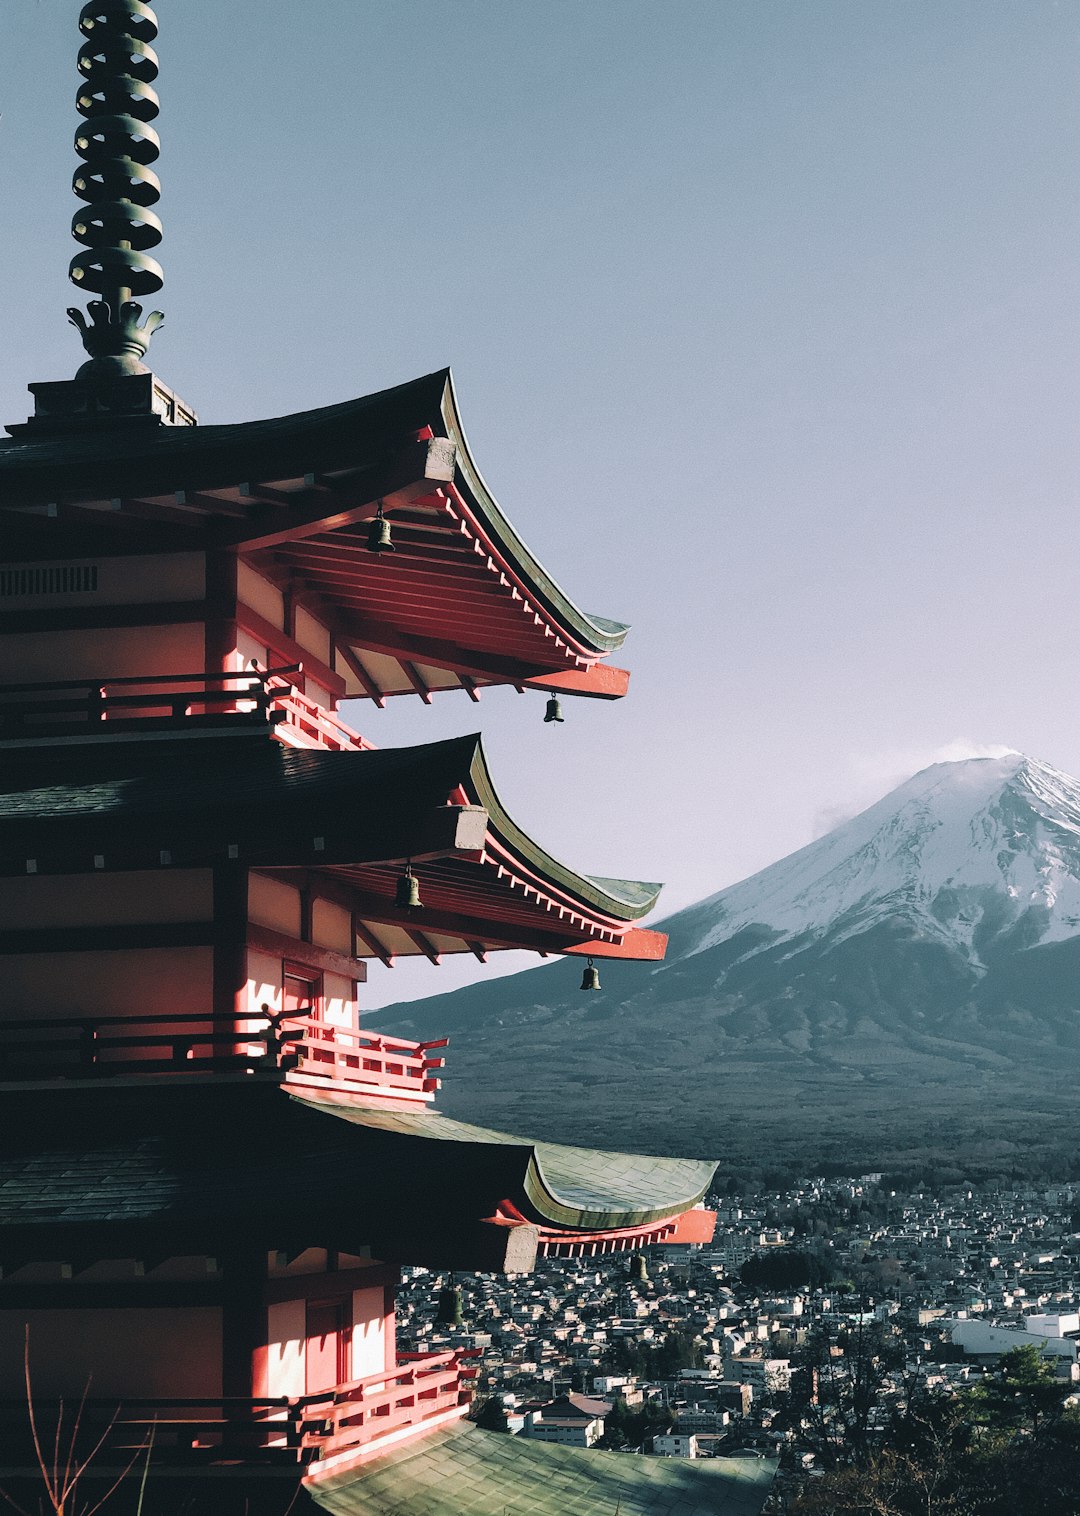 Travel Tips and Stories of Fujiyoshida in Japan